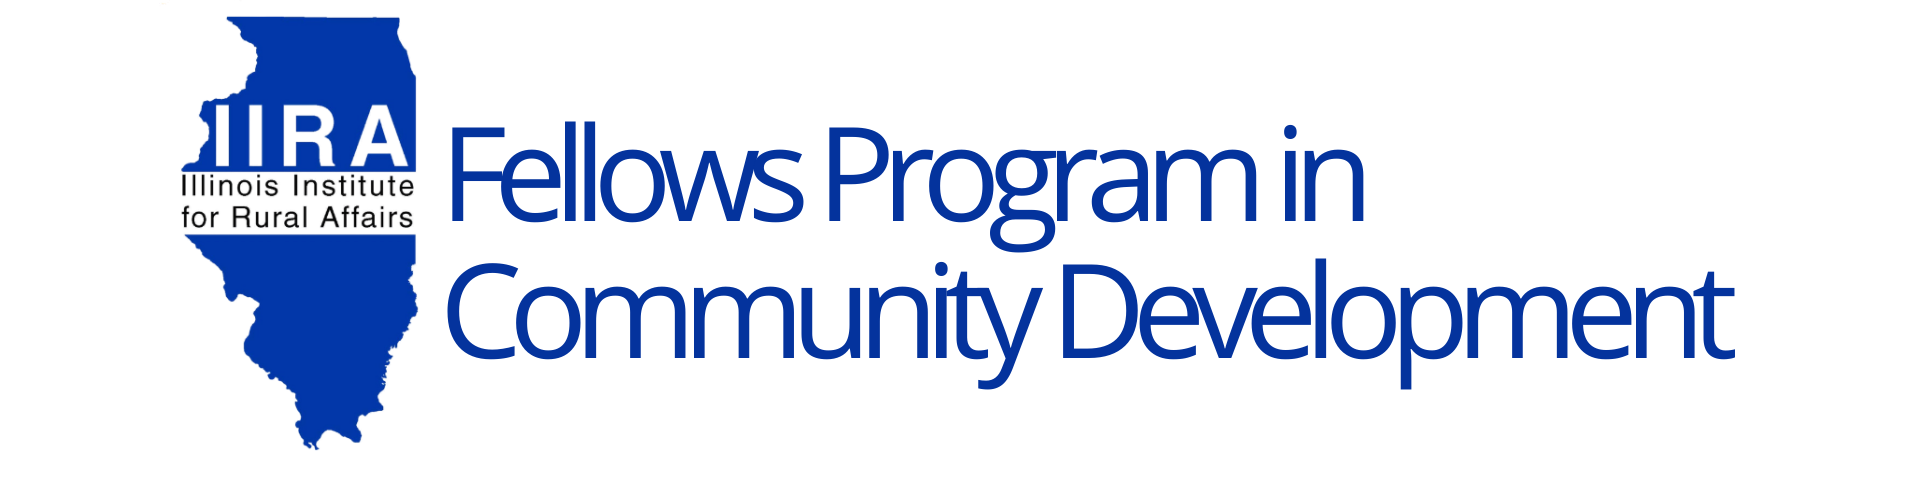 Fellows Program Logo 2021 for webpage